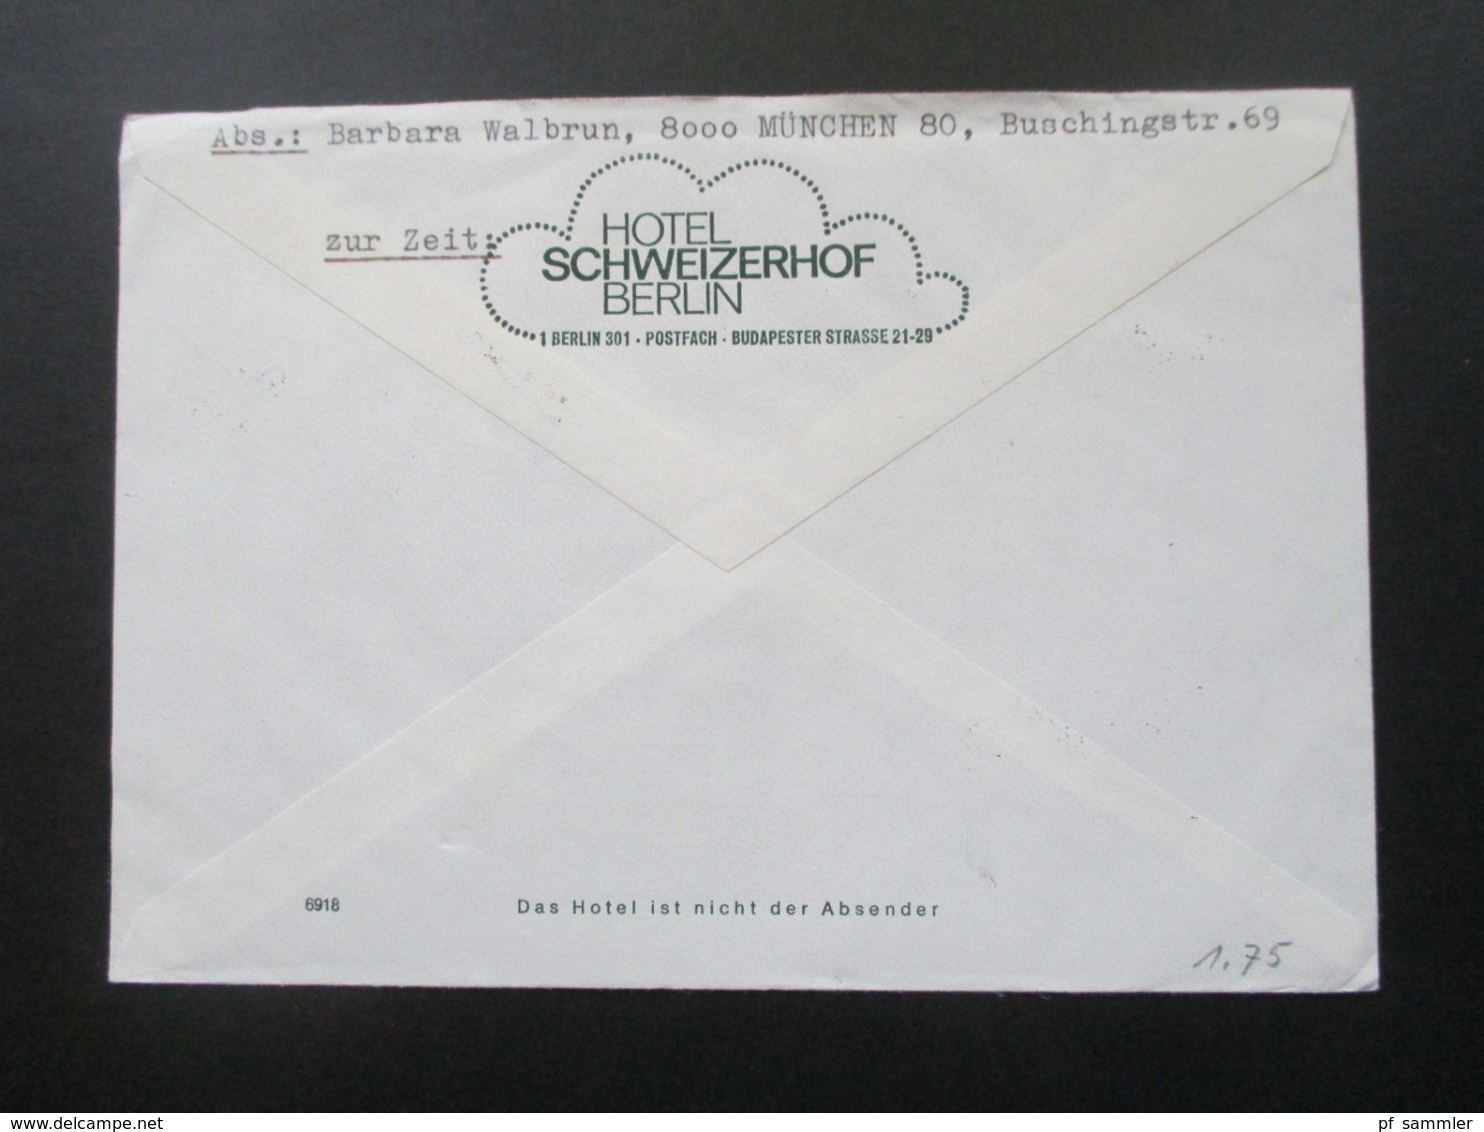 Berlin 1971 SST Historische Ausstellung Umschlag Des Hotel Schweizerhof Berlin Einschreiben Berlin 462 Vn 1 Berlin 12 - Covers & Documents